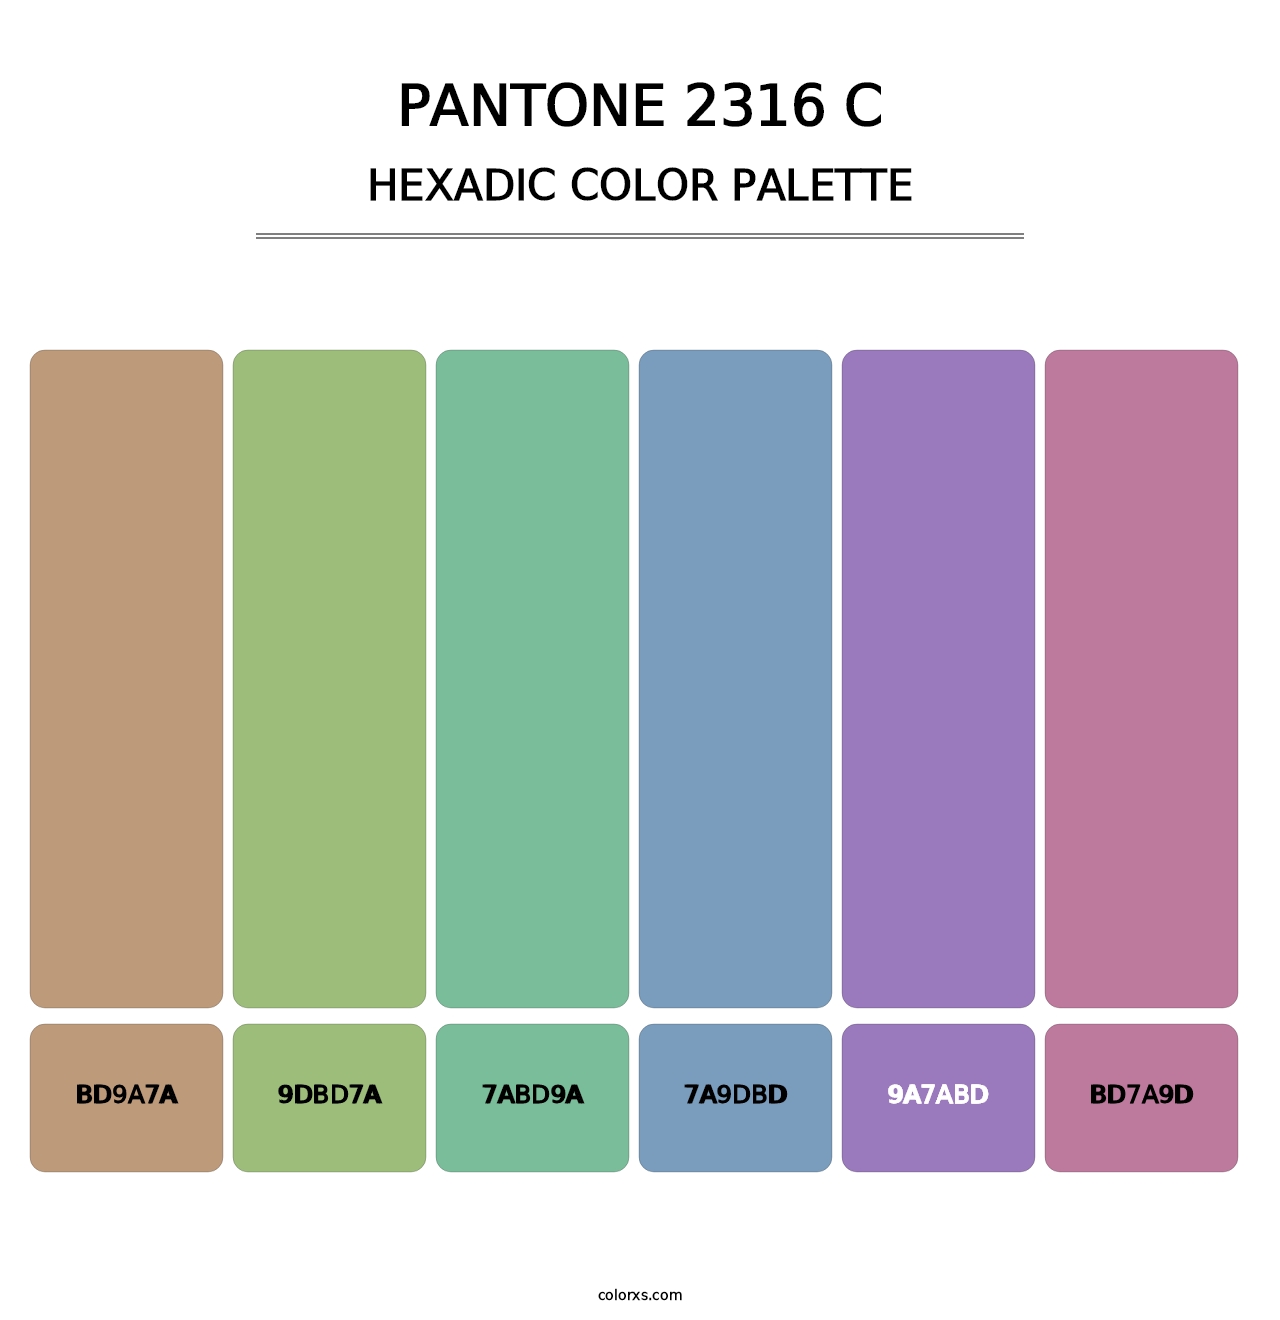 PANTONE 2316 C - Hexadic Color Palette